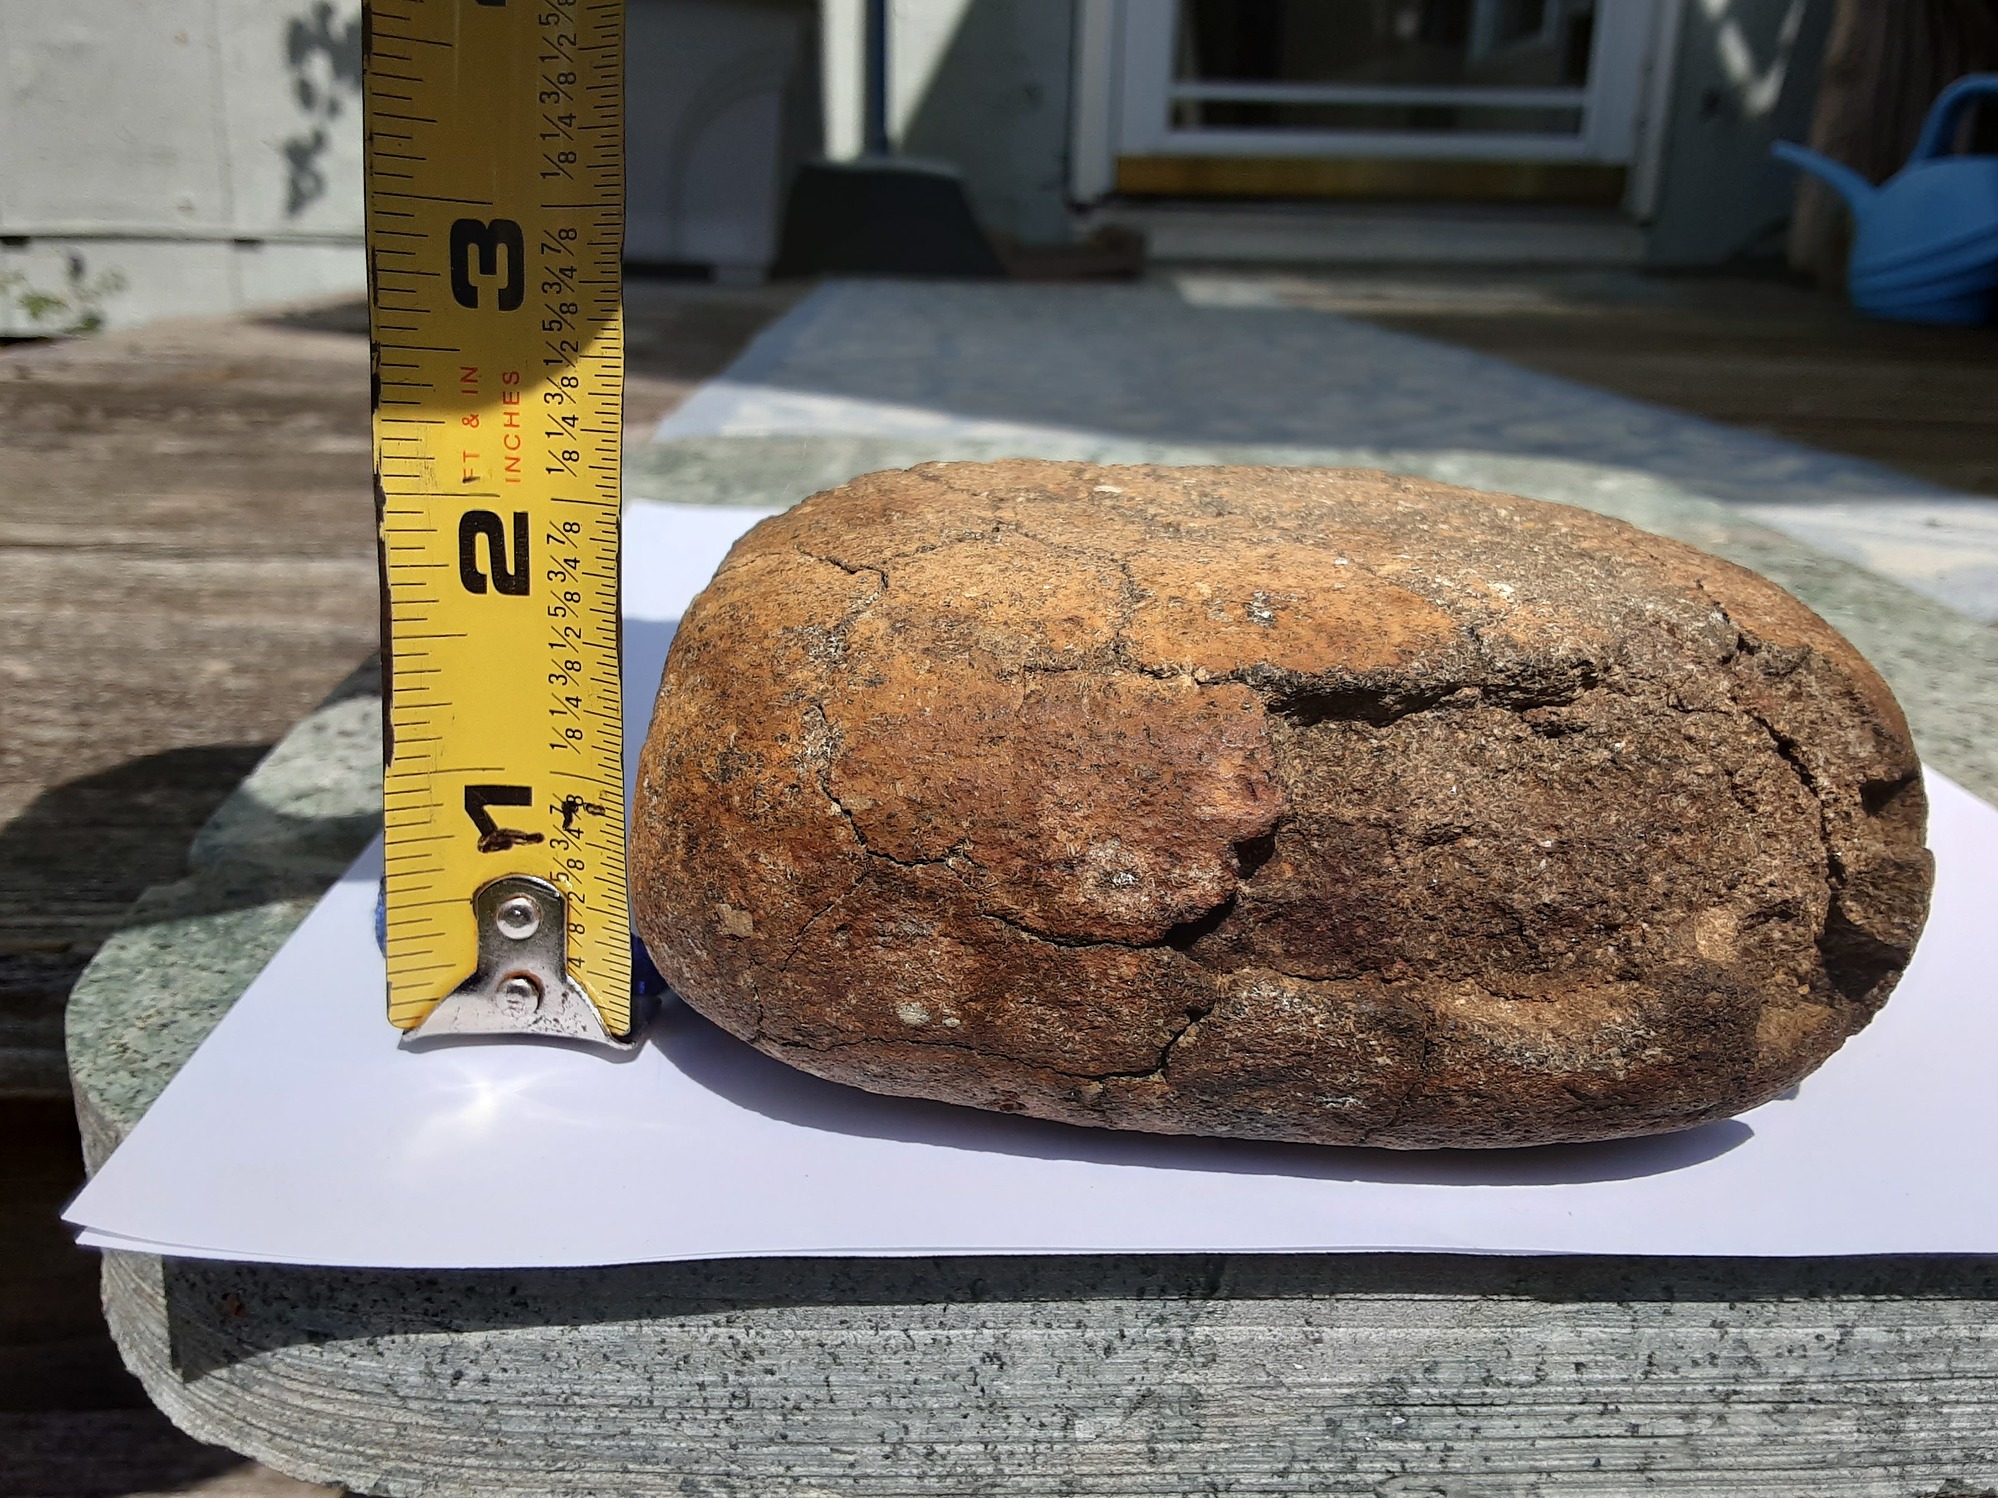 Fossils : Dinosaur Egg found in MA, help identify species?